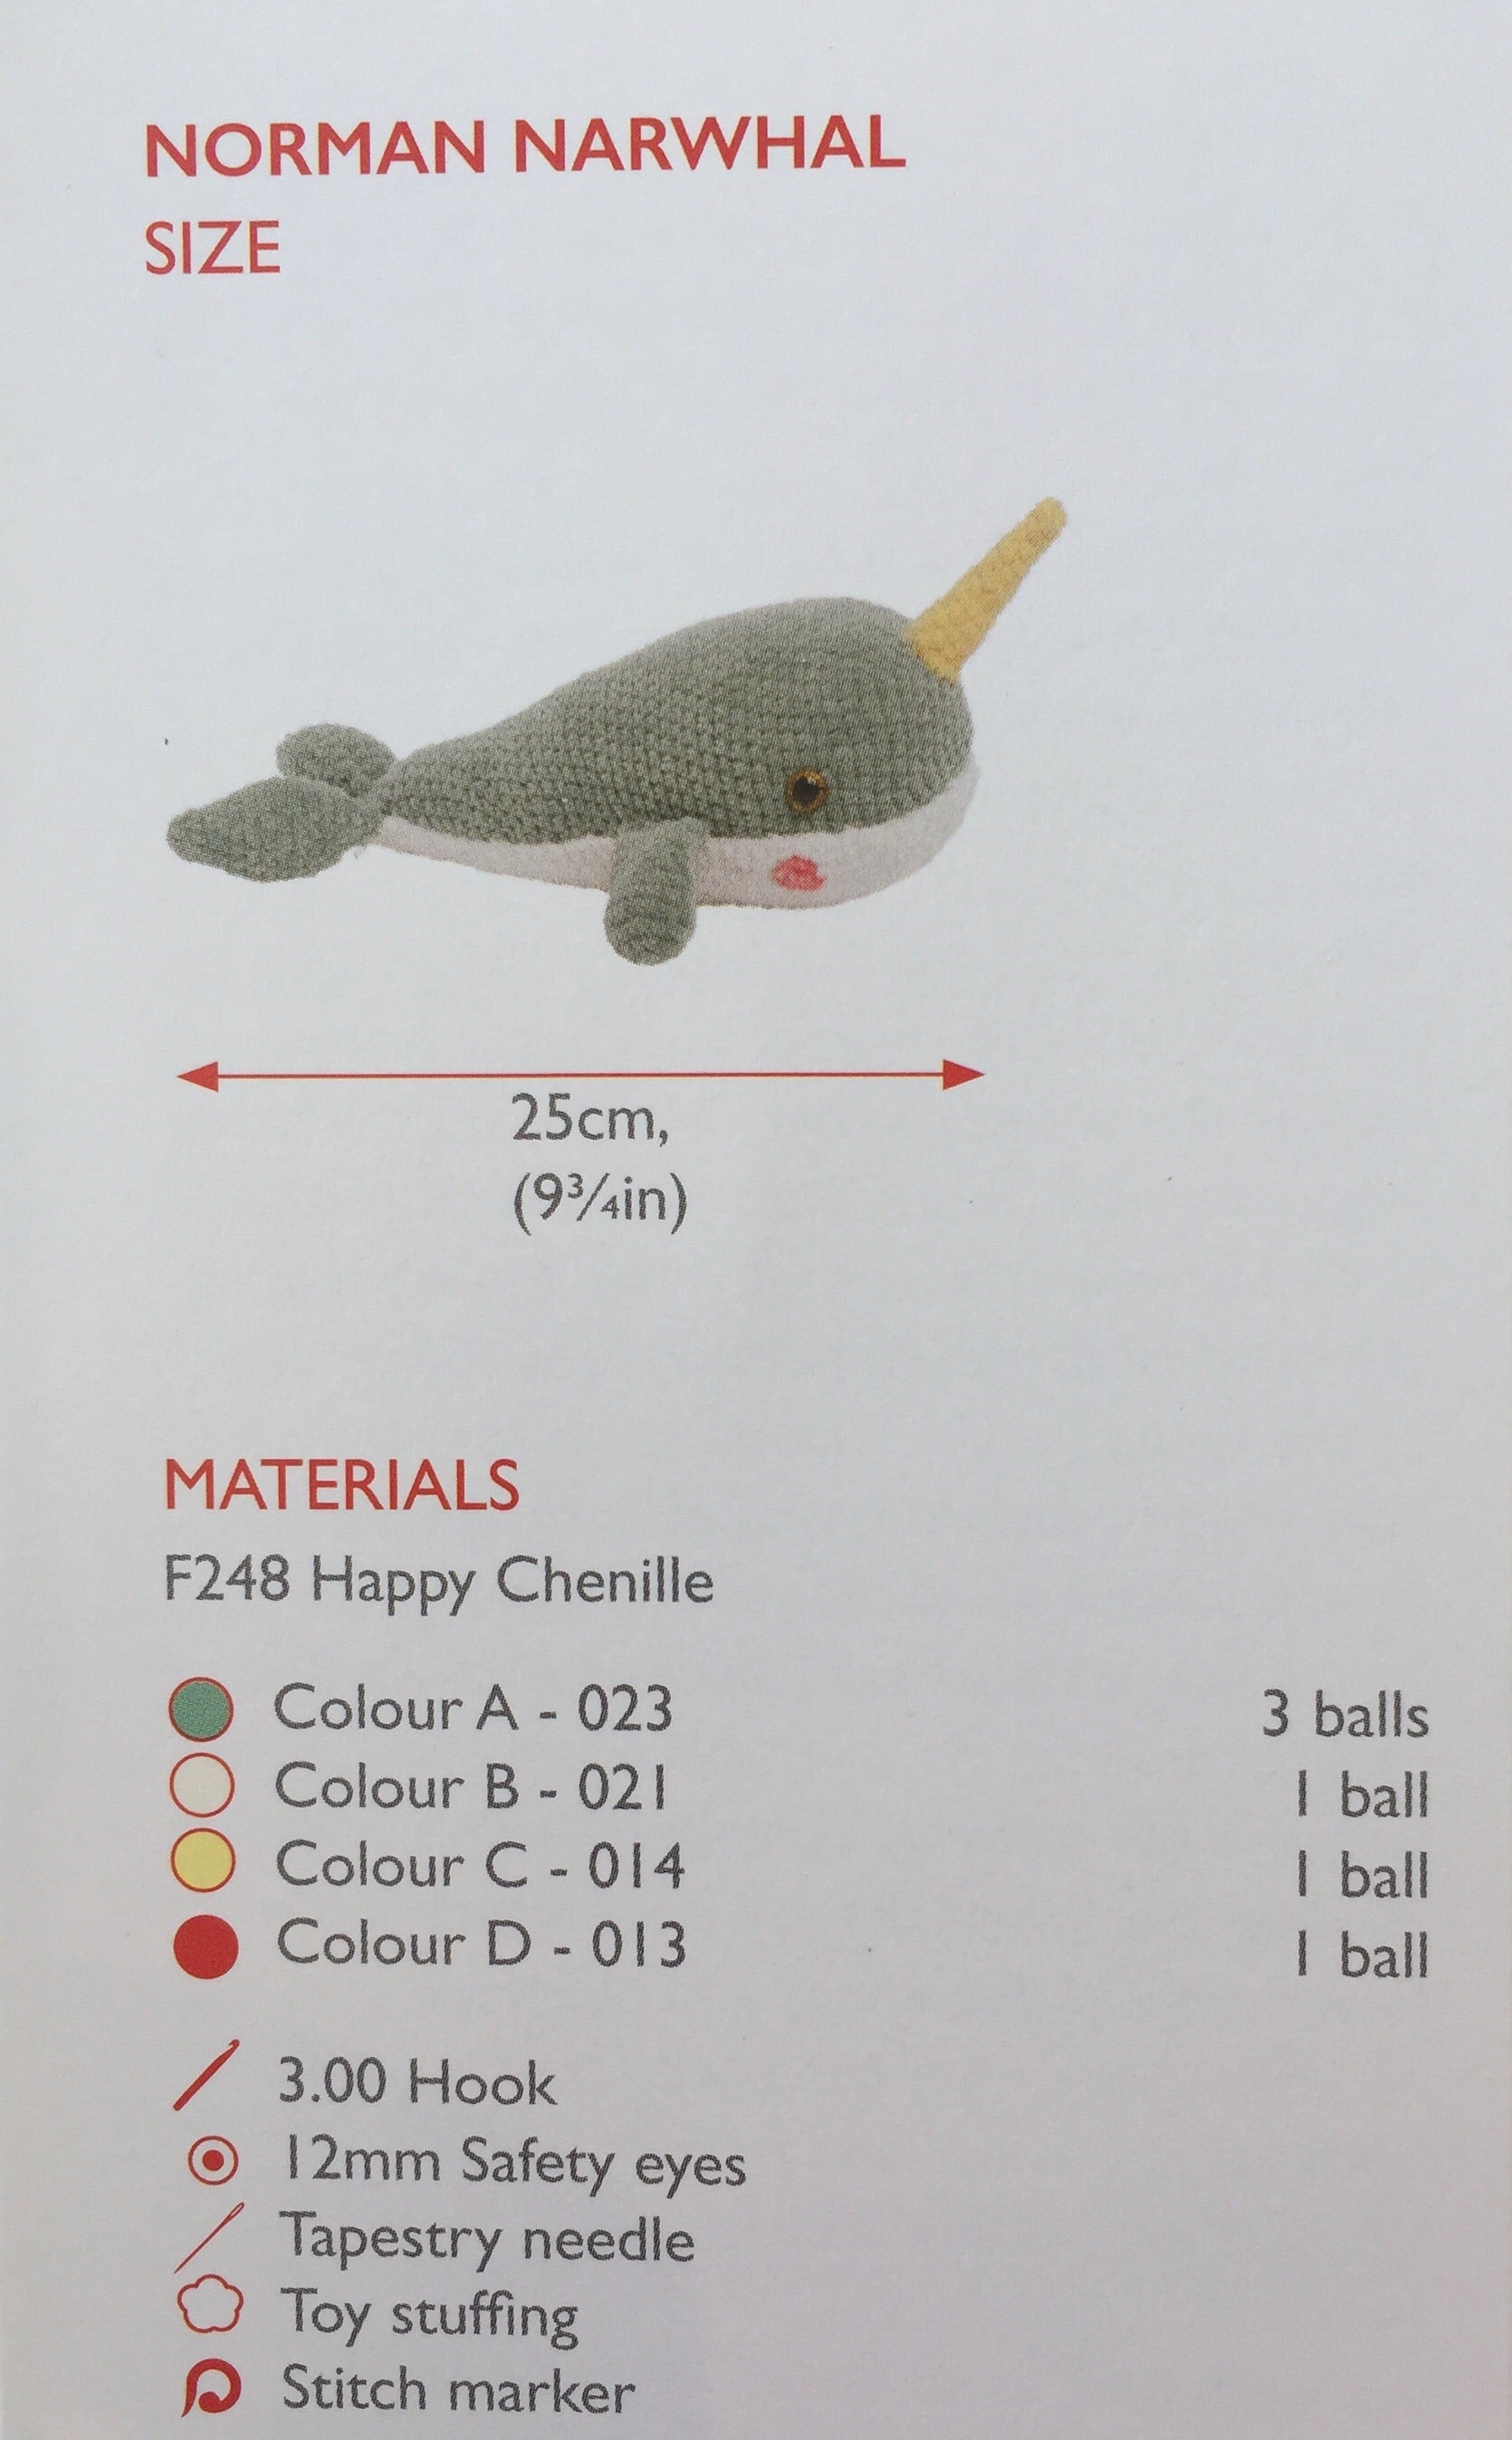 Sirdar Happy Chenille Book 3 - Improbable Animals